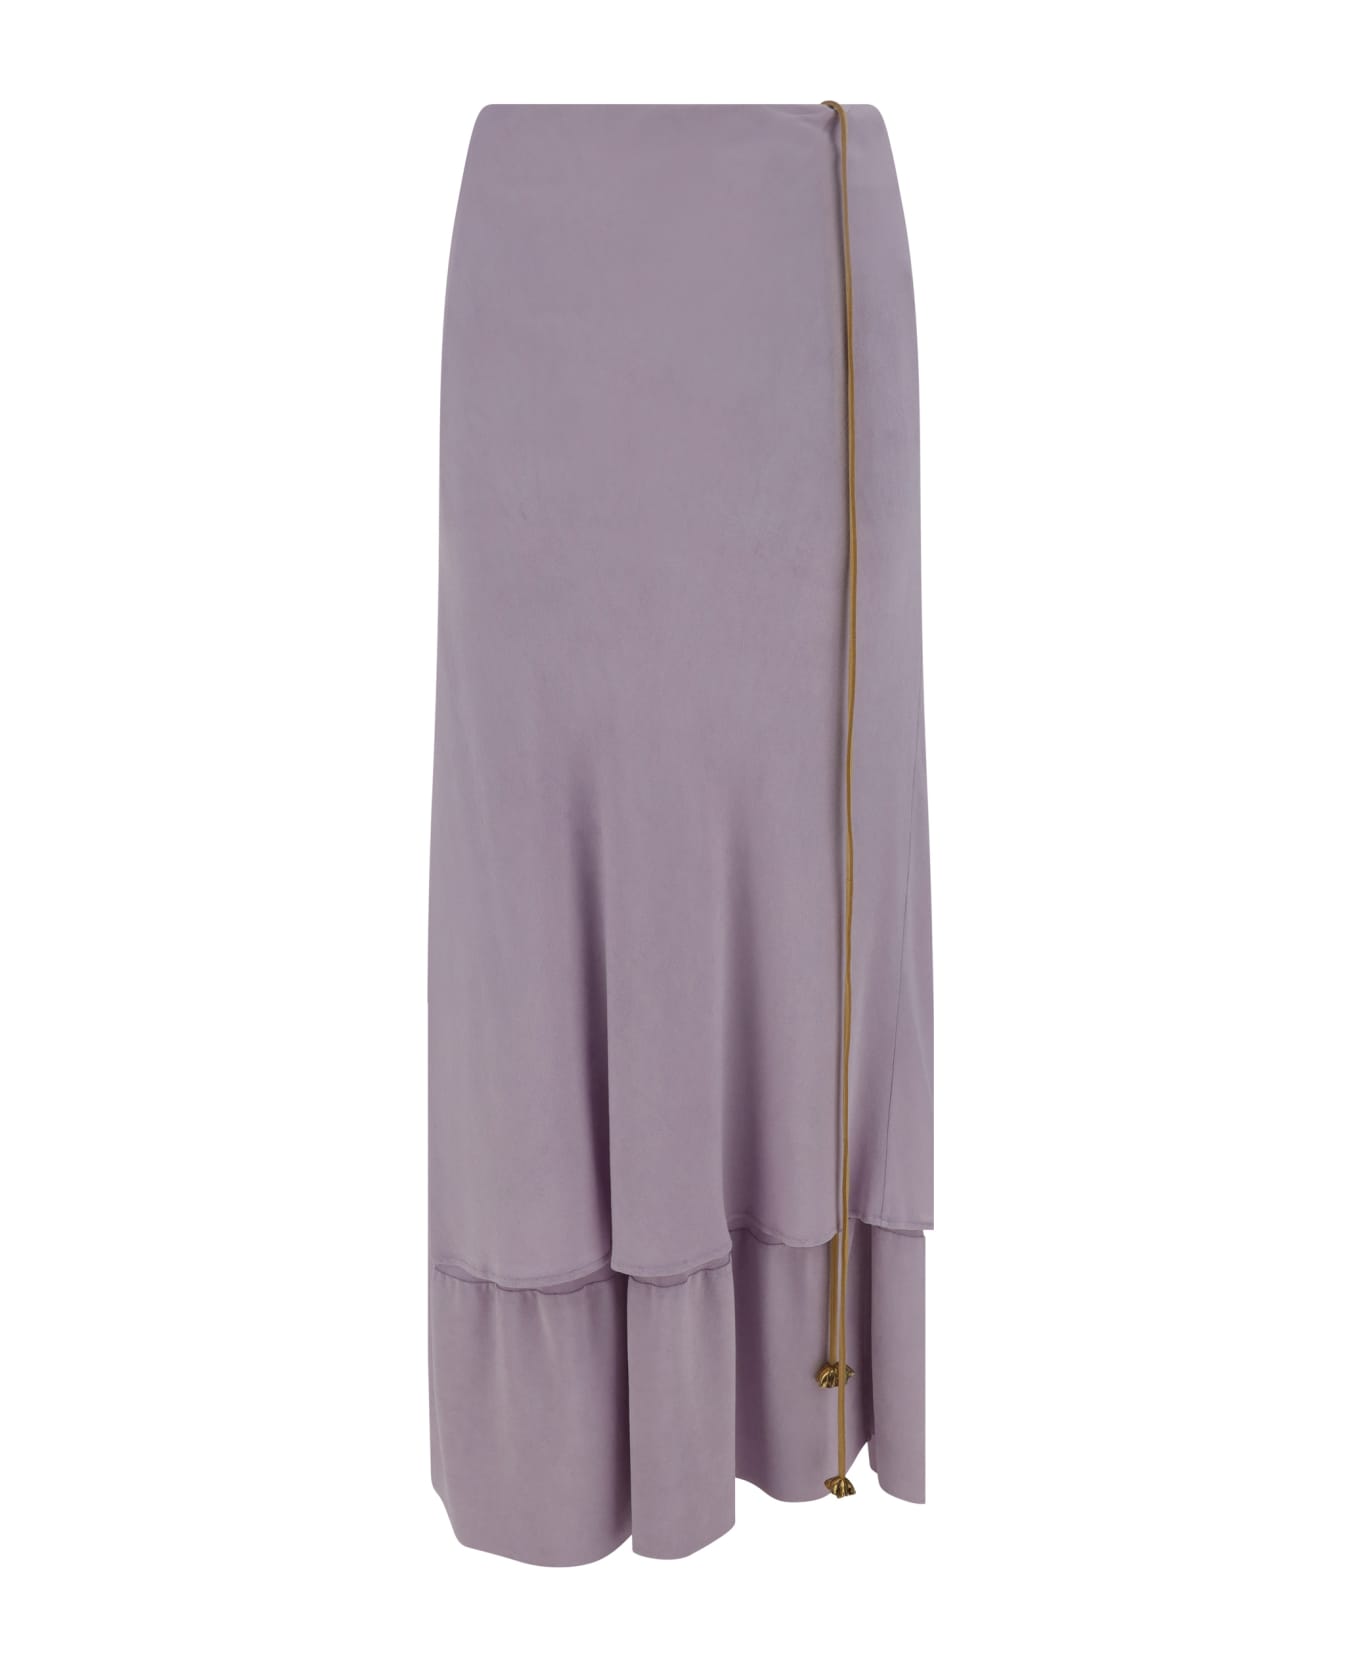 Quira Skirt - Misty Lilac スカート